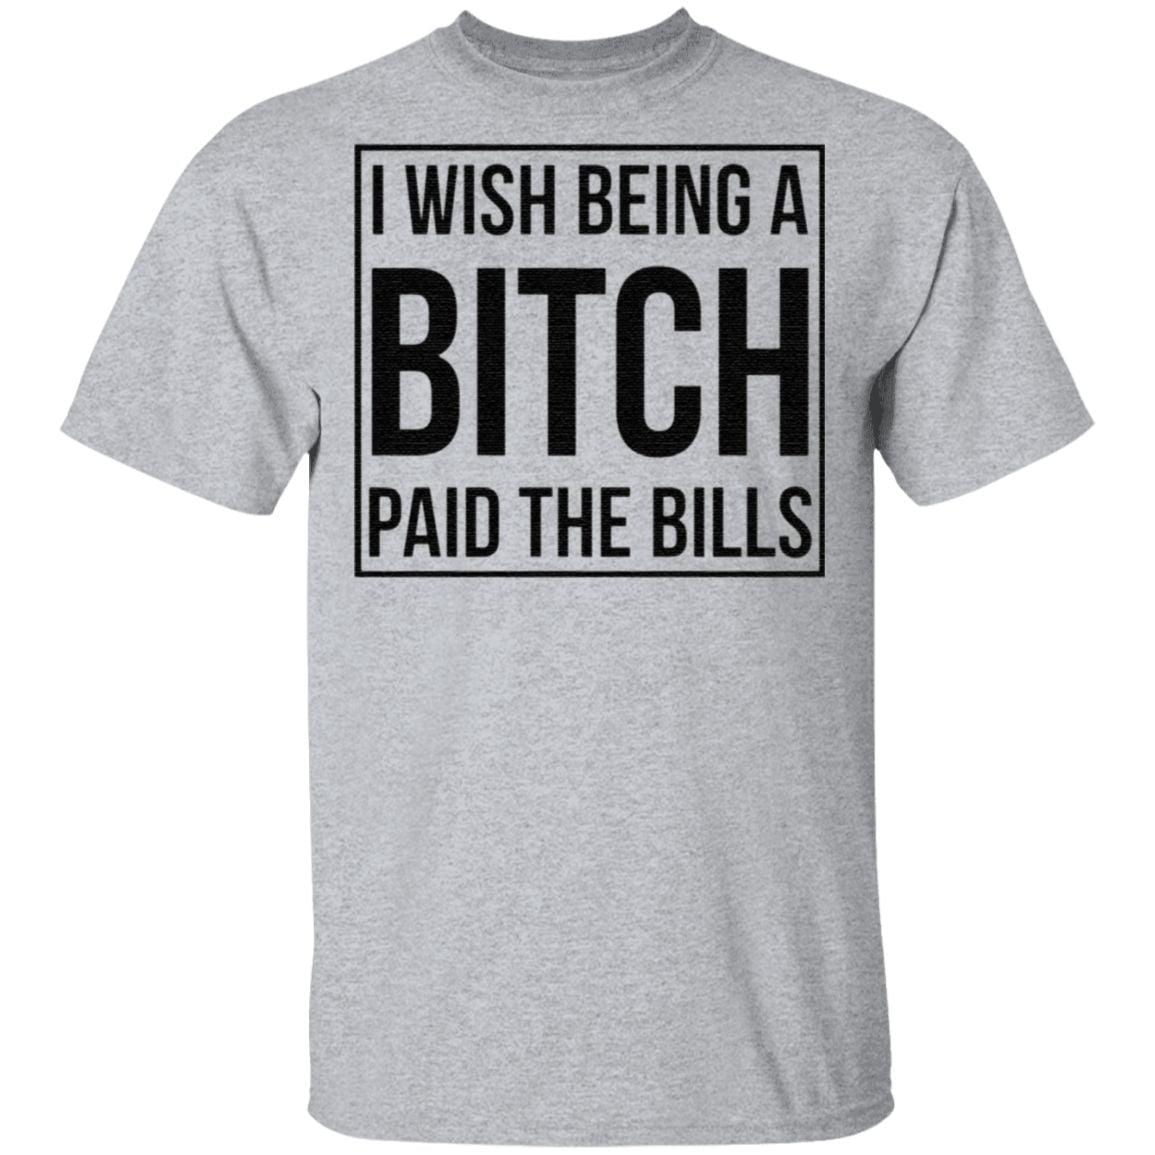 I wish being a bitch paid the bills t shirt